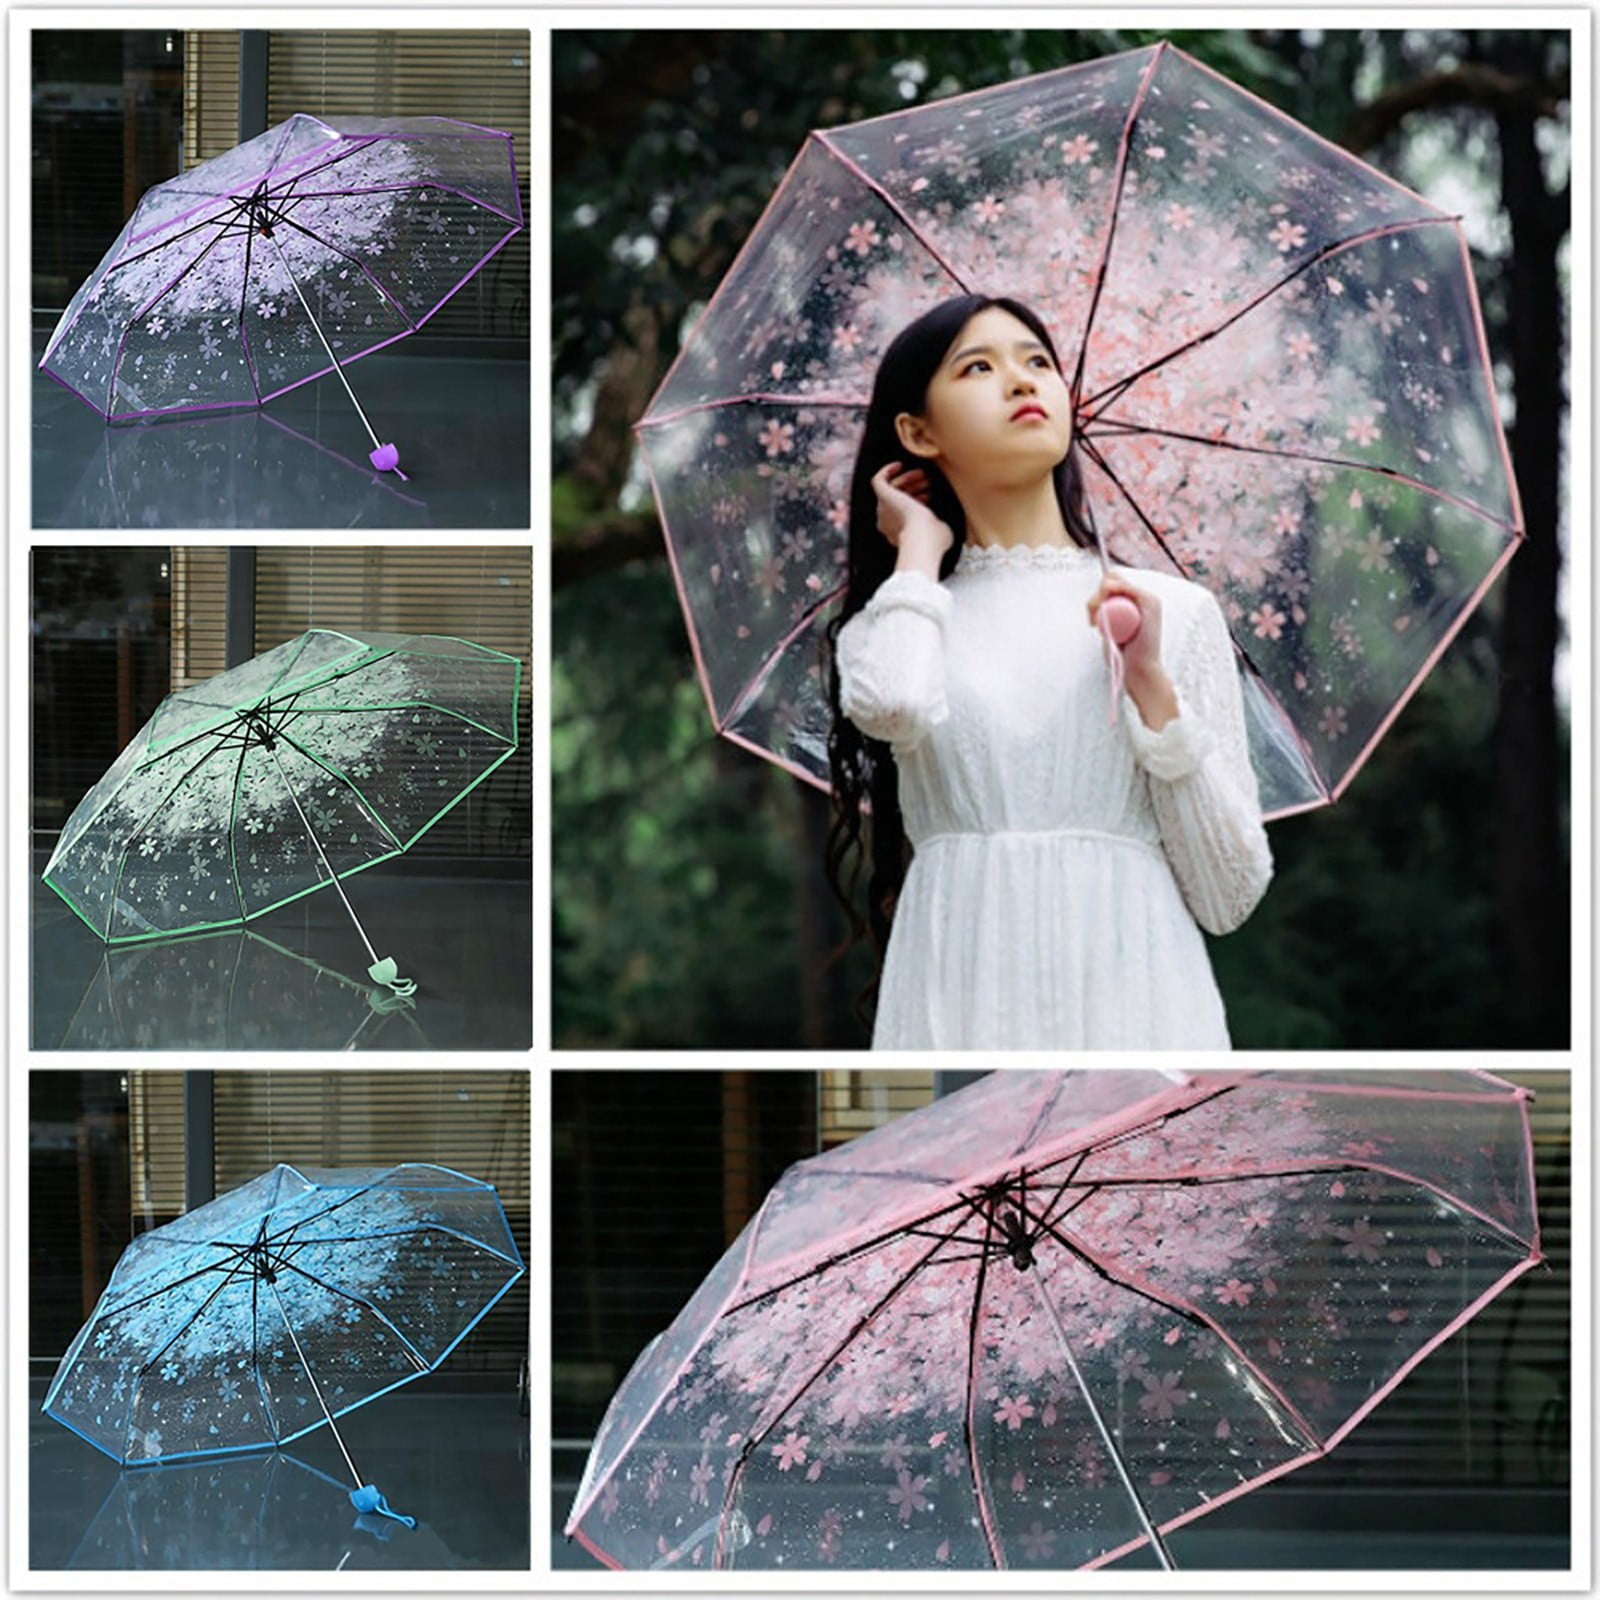 Blue lamta1k Umbrella-Fashion Transparent Cherry Blossoms Dome Shape Birdcage Windproof Stick Umbrella